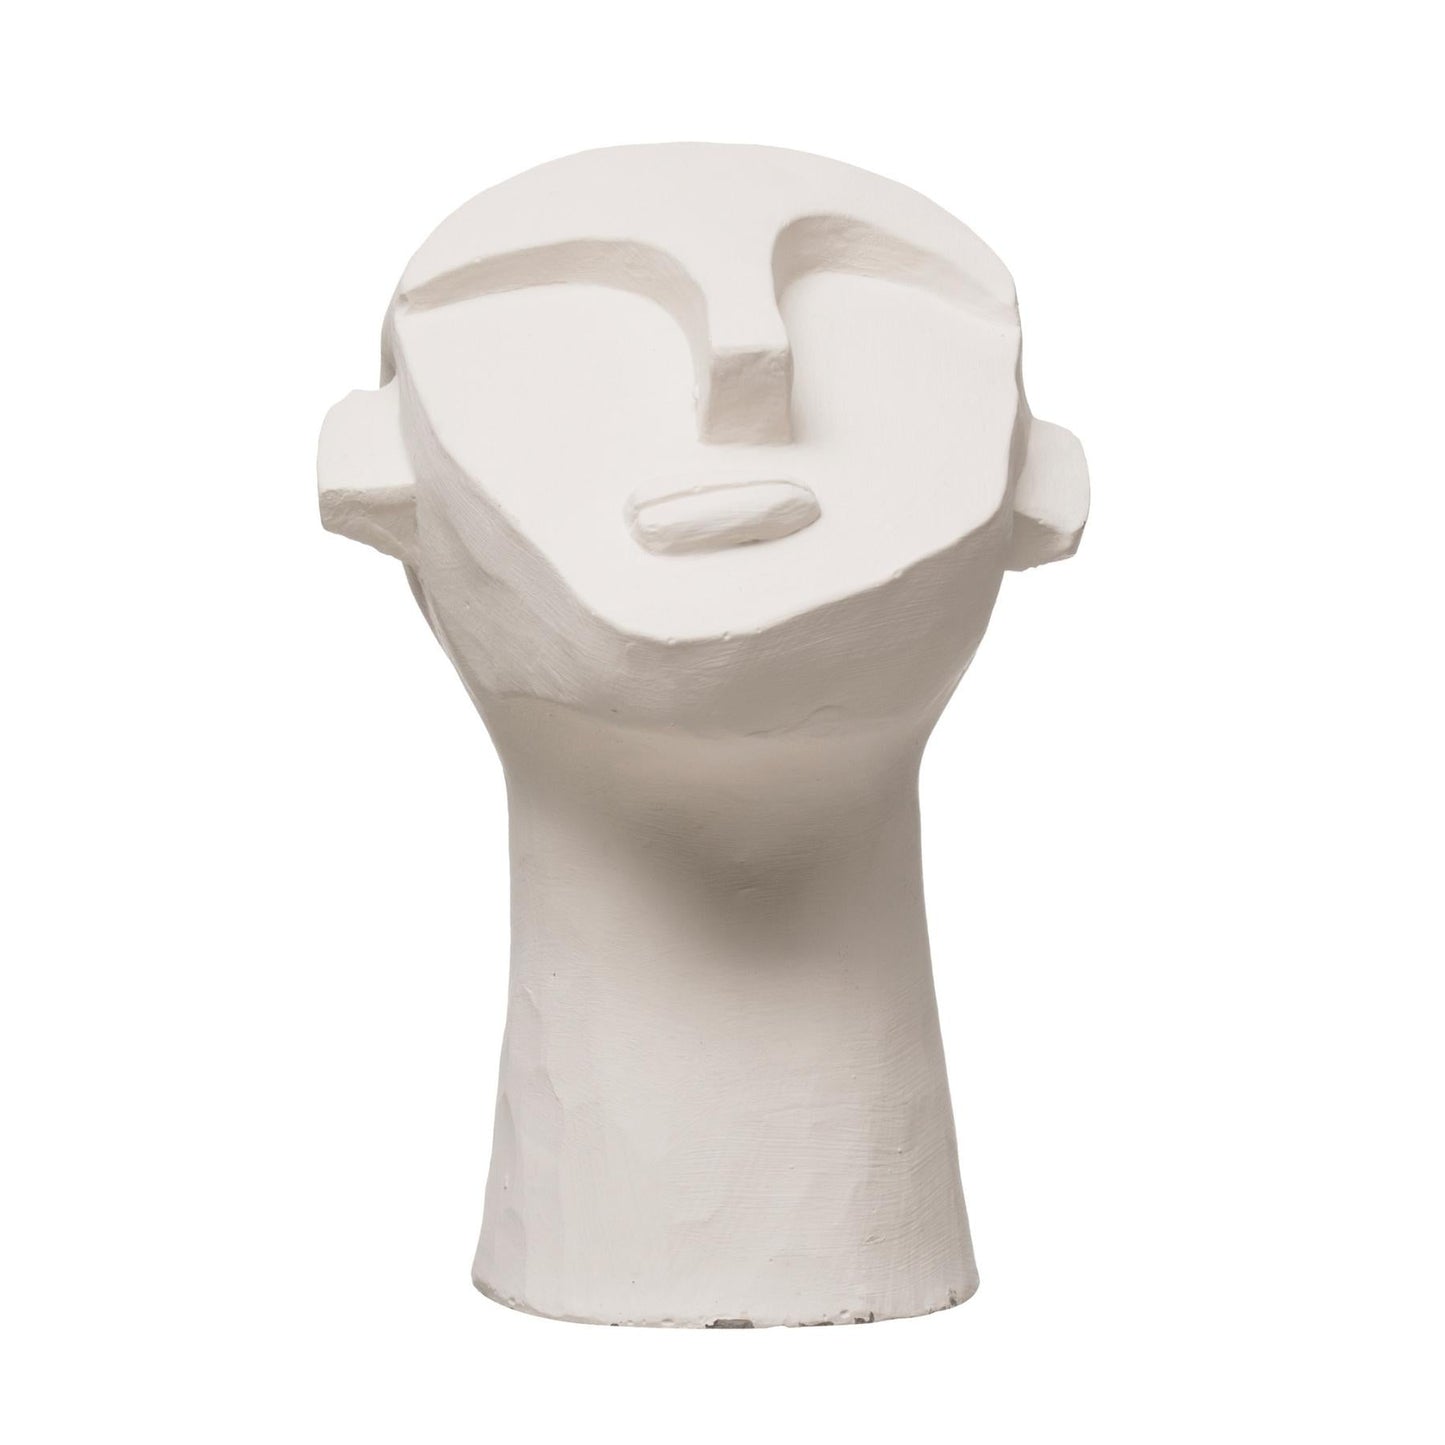 The Designer Cement Face Sculpture - LJ Living